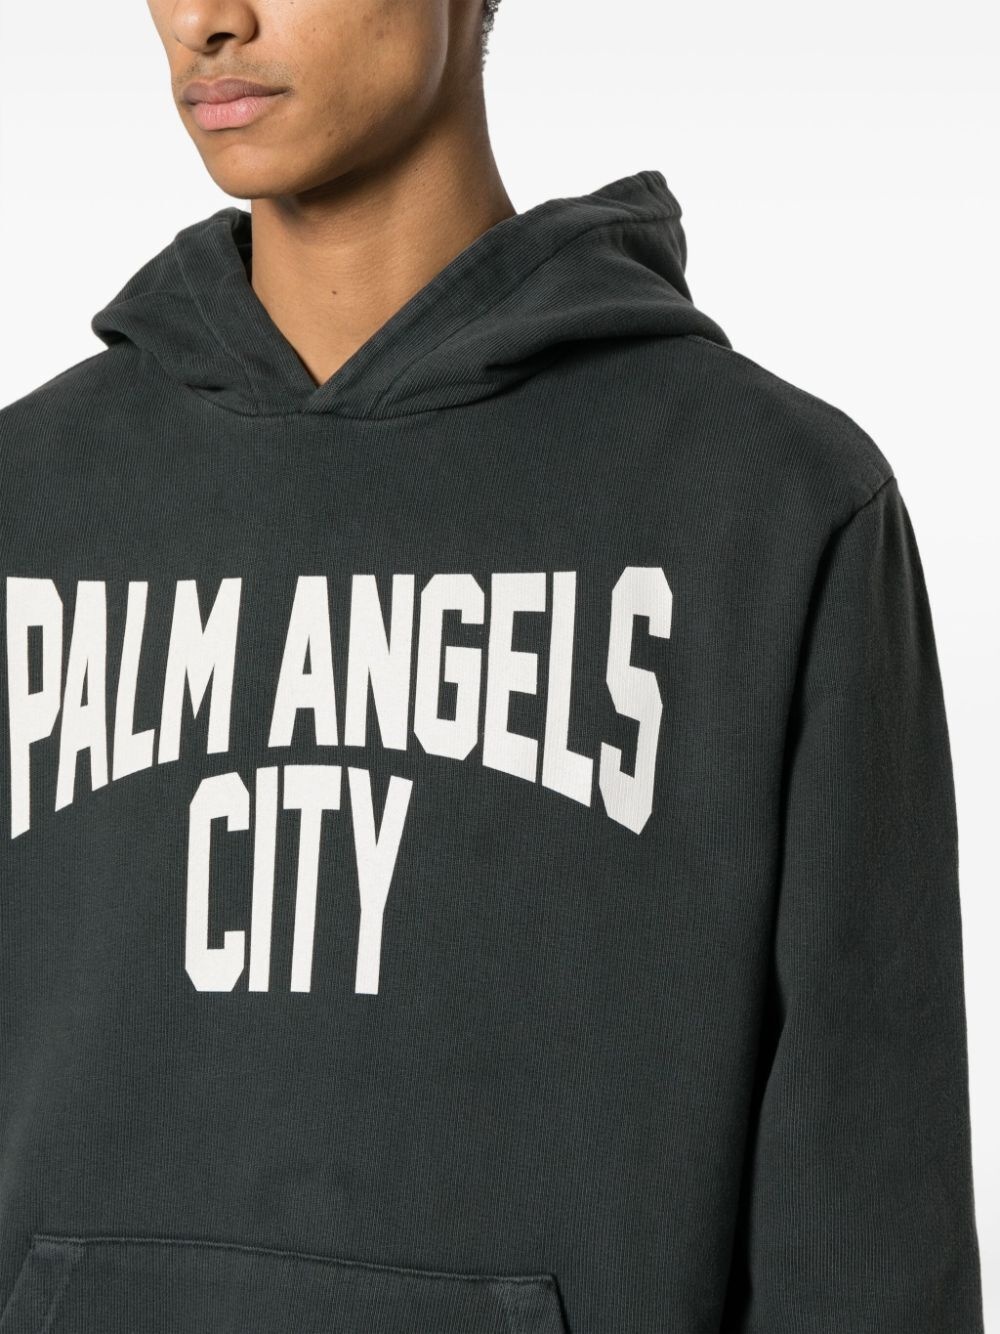 Palm angels city hoodie - 5